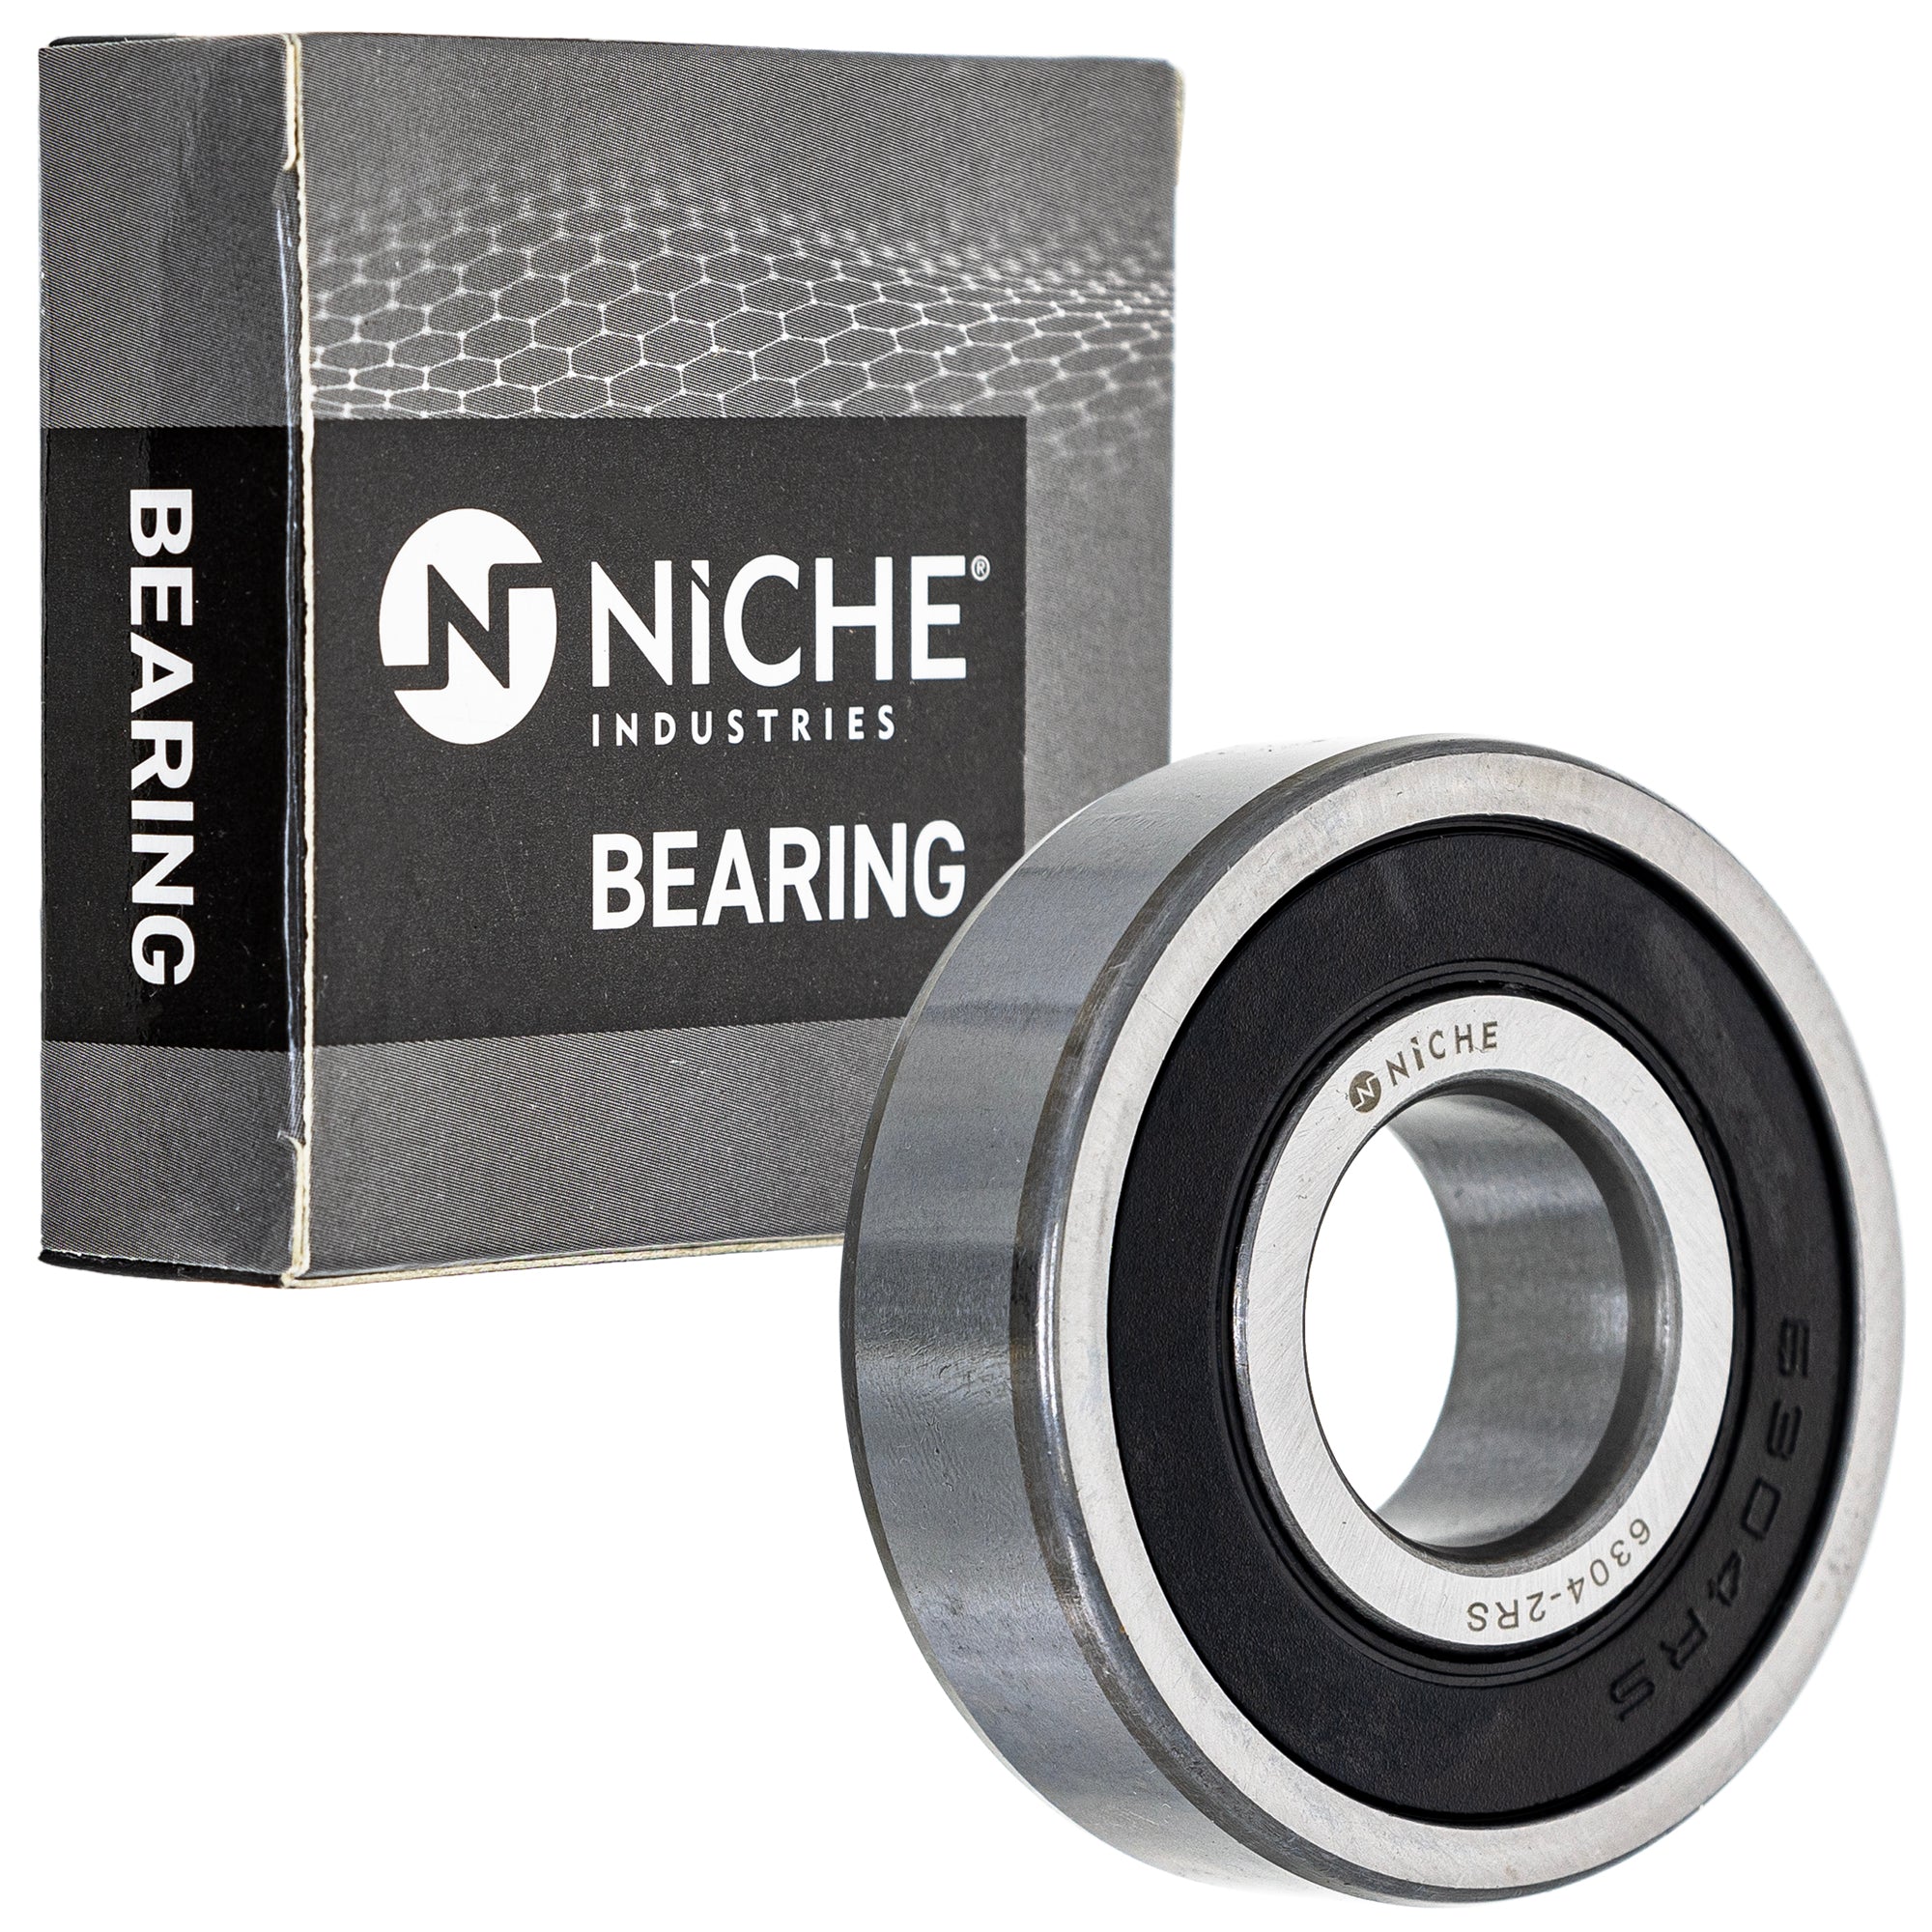 NICHE 519-CBB2244R Bearing for zOTHER XT600 XT550 XS650S2 XS650S